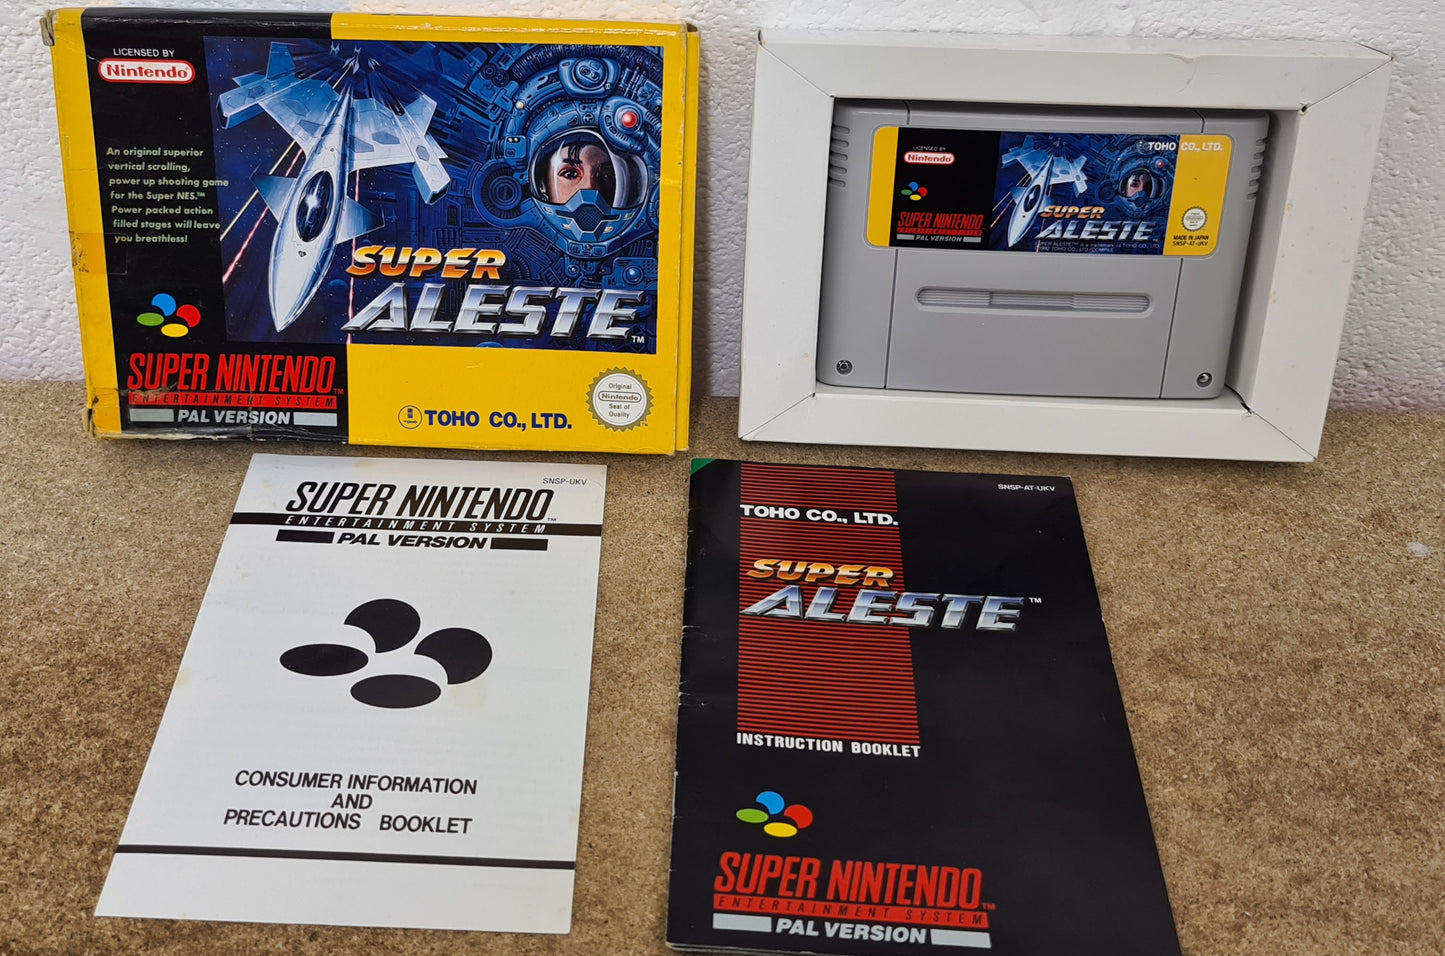 Super Aleste Super Nintendo (SNES) Game